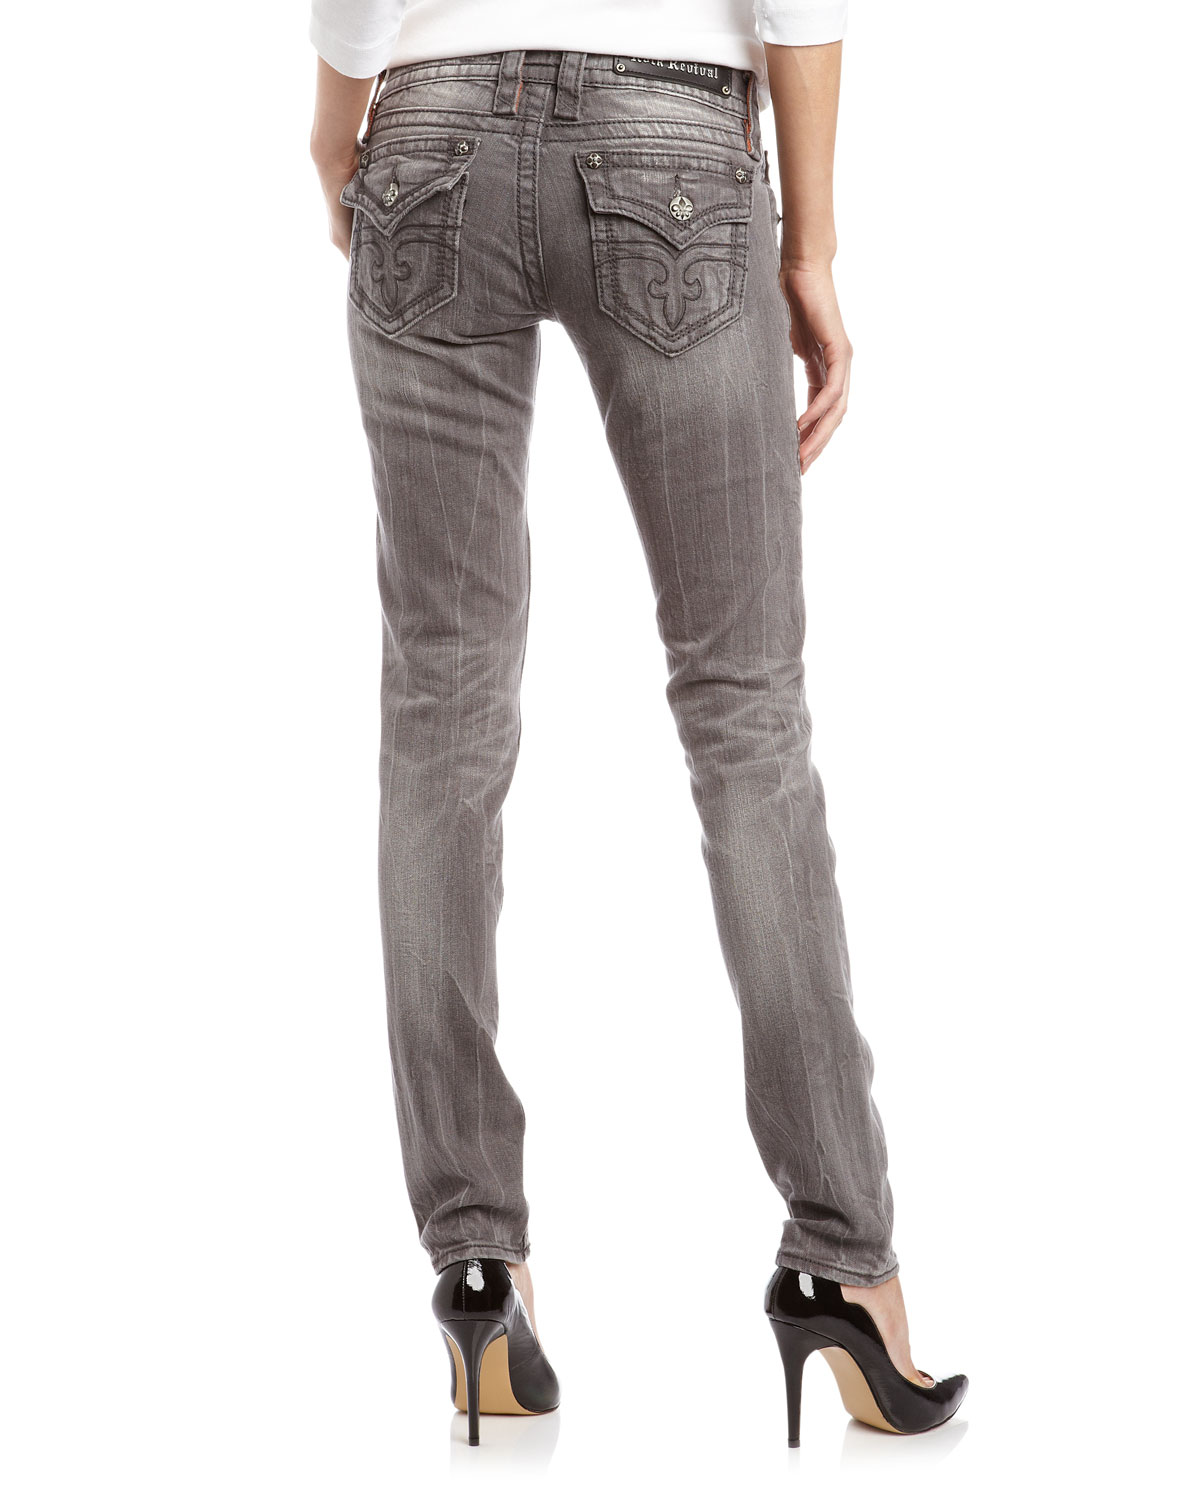 Lyst - Rock Revival Skinny Celine Jeans in Gray